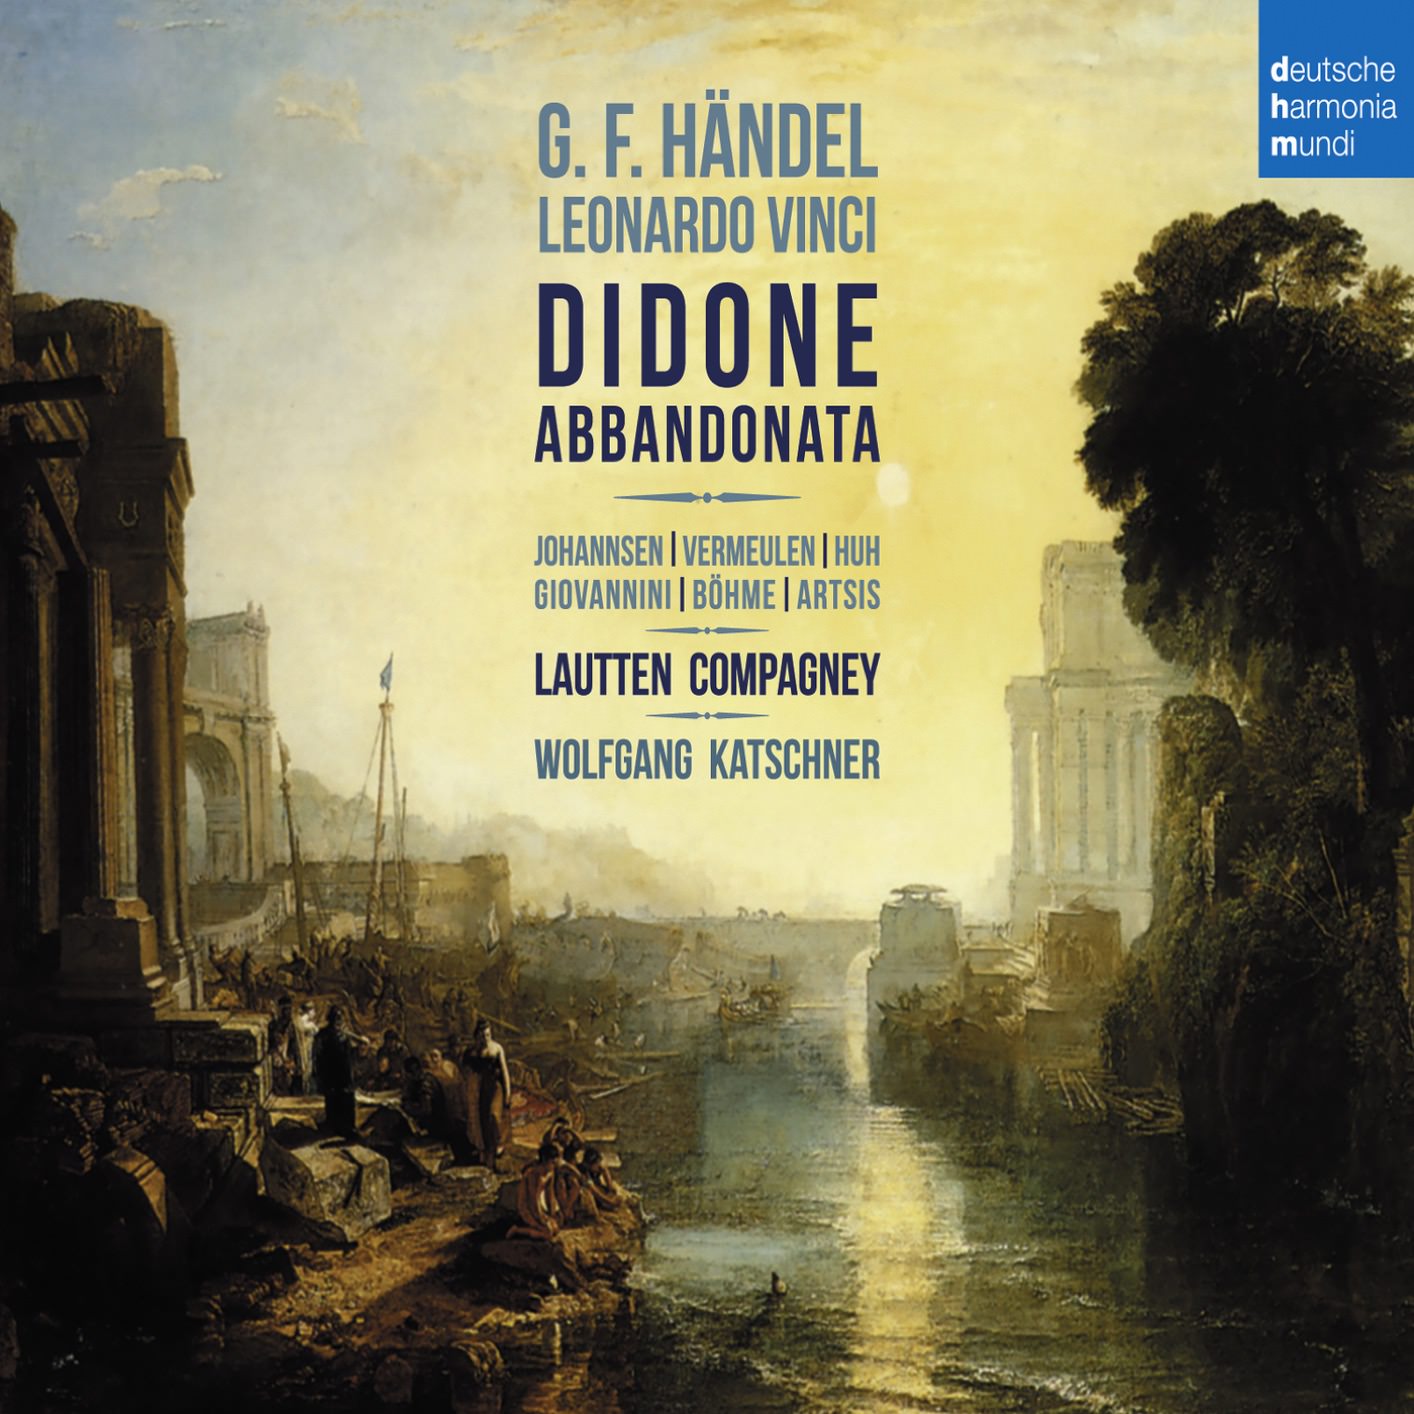 Lautten Compagney - Handel, Vinci: Didone abbandonata (2018) [FLAC 24bit/48kHz]